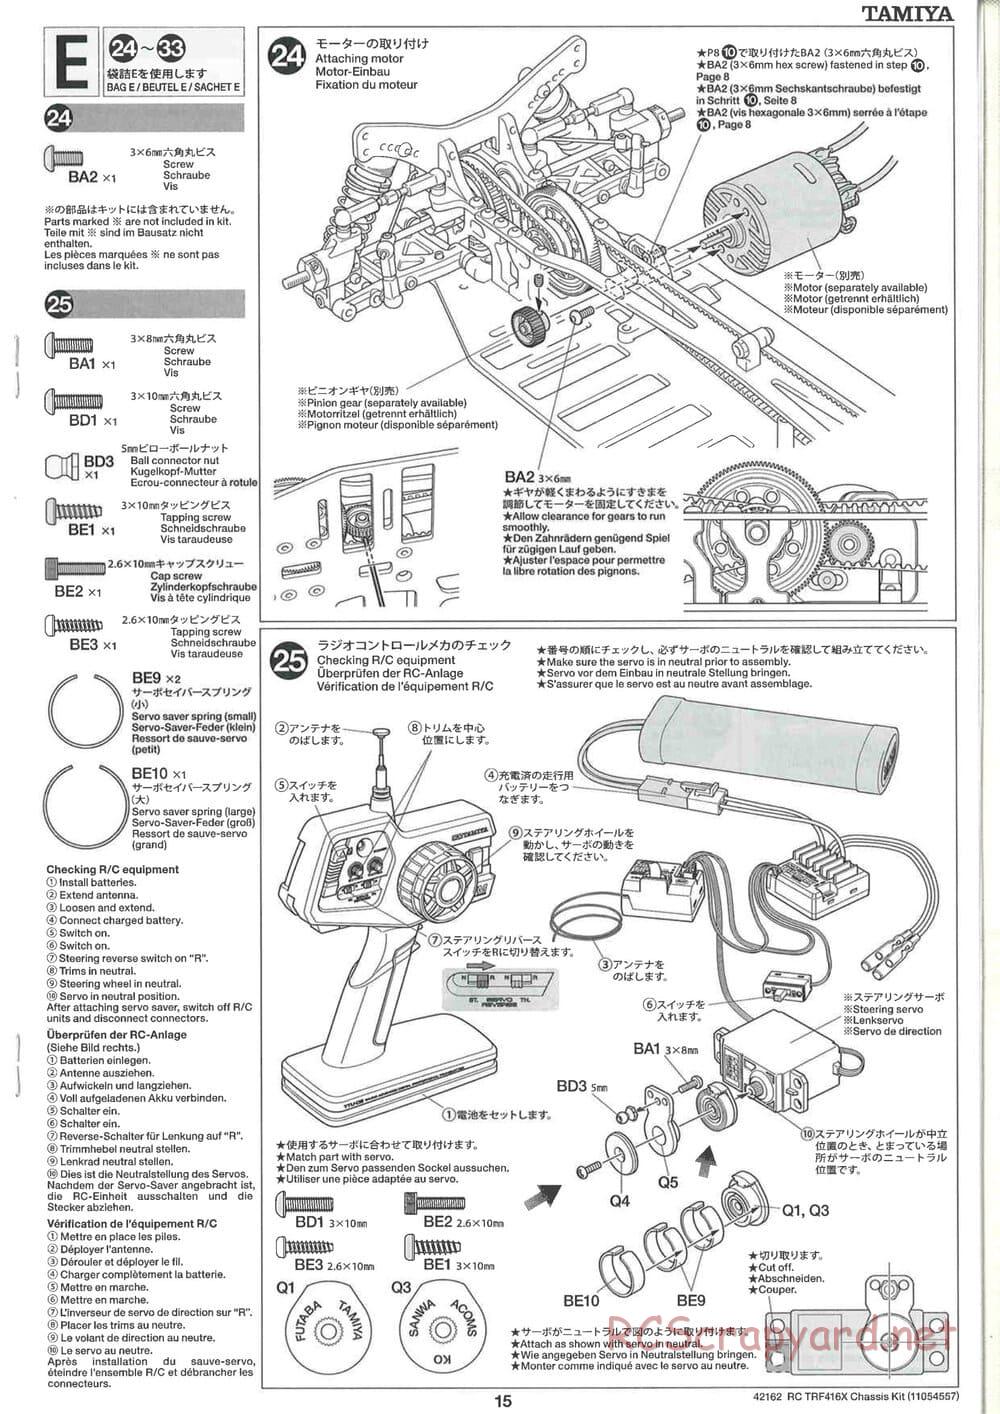 Tamiya - TRF416X Chassis - Manual - Page 15